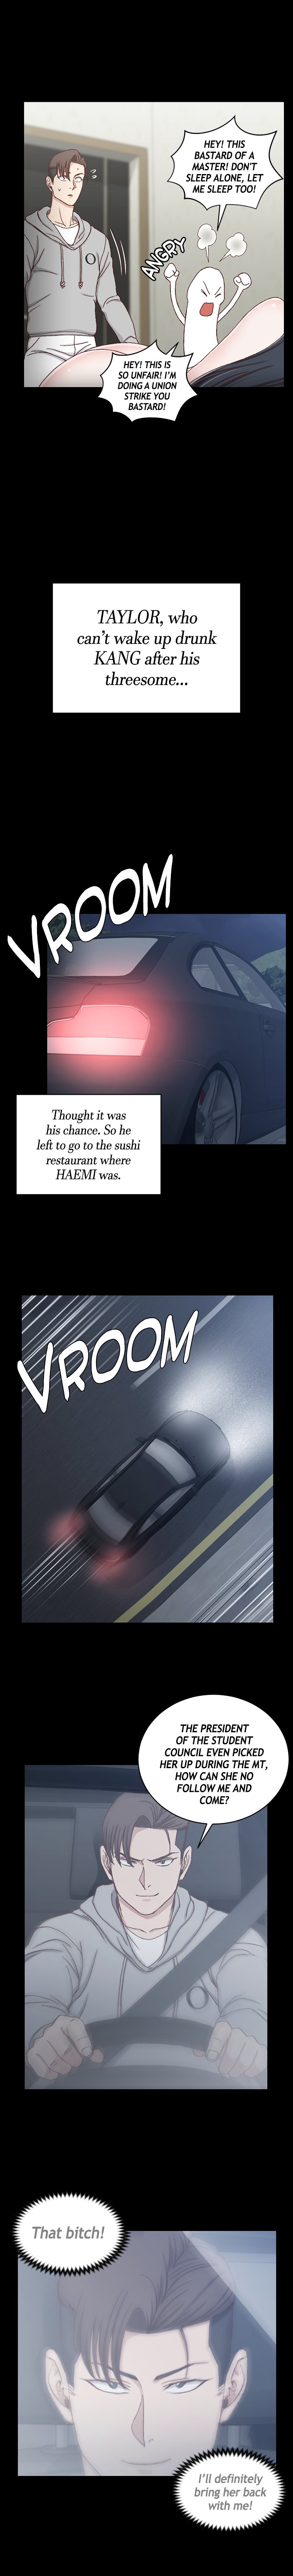 That Man’s Room image